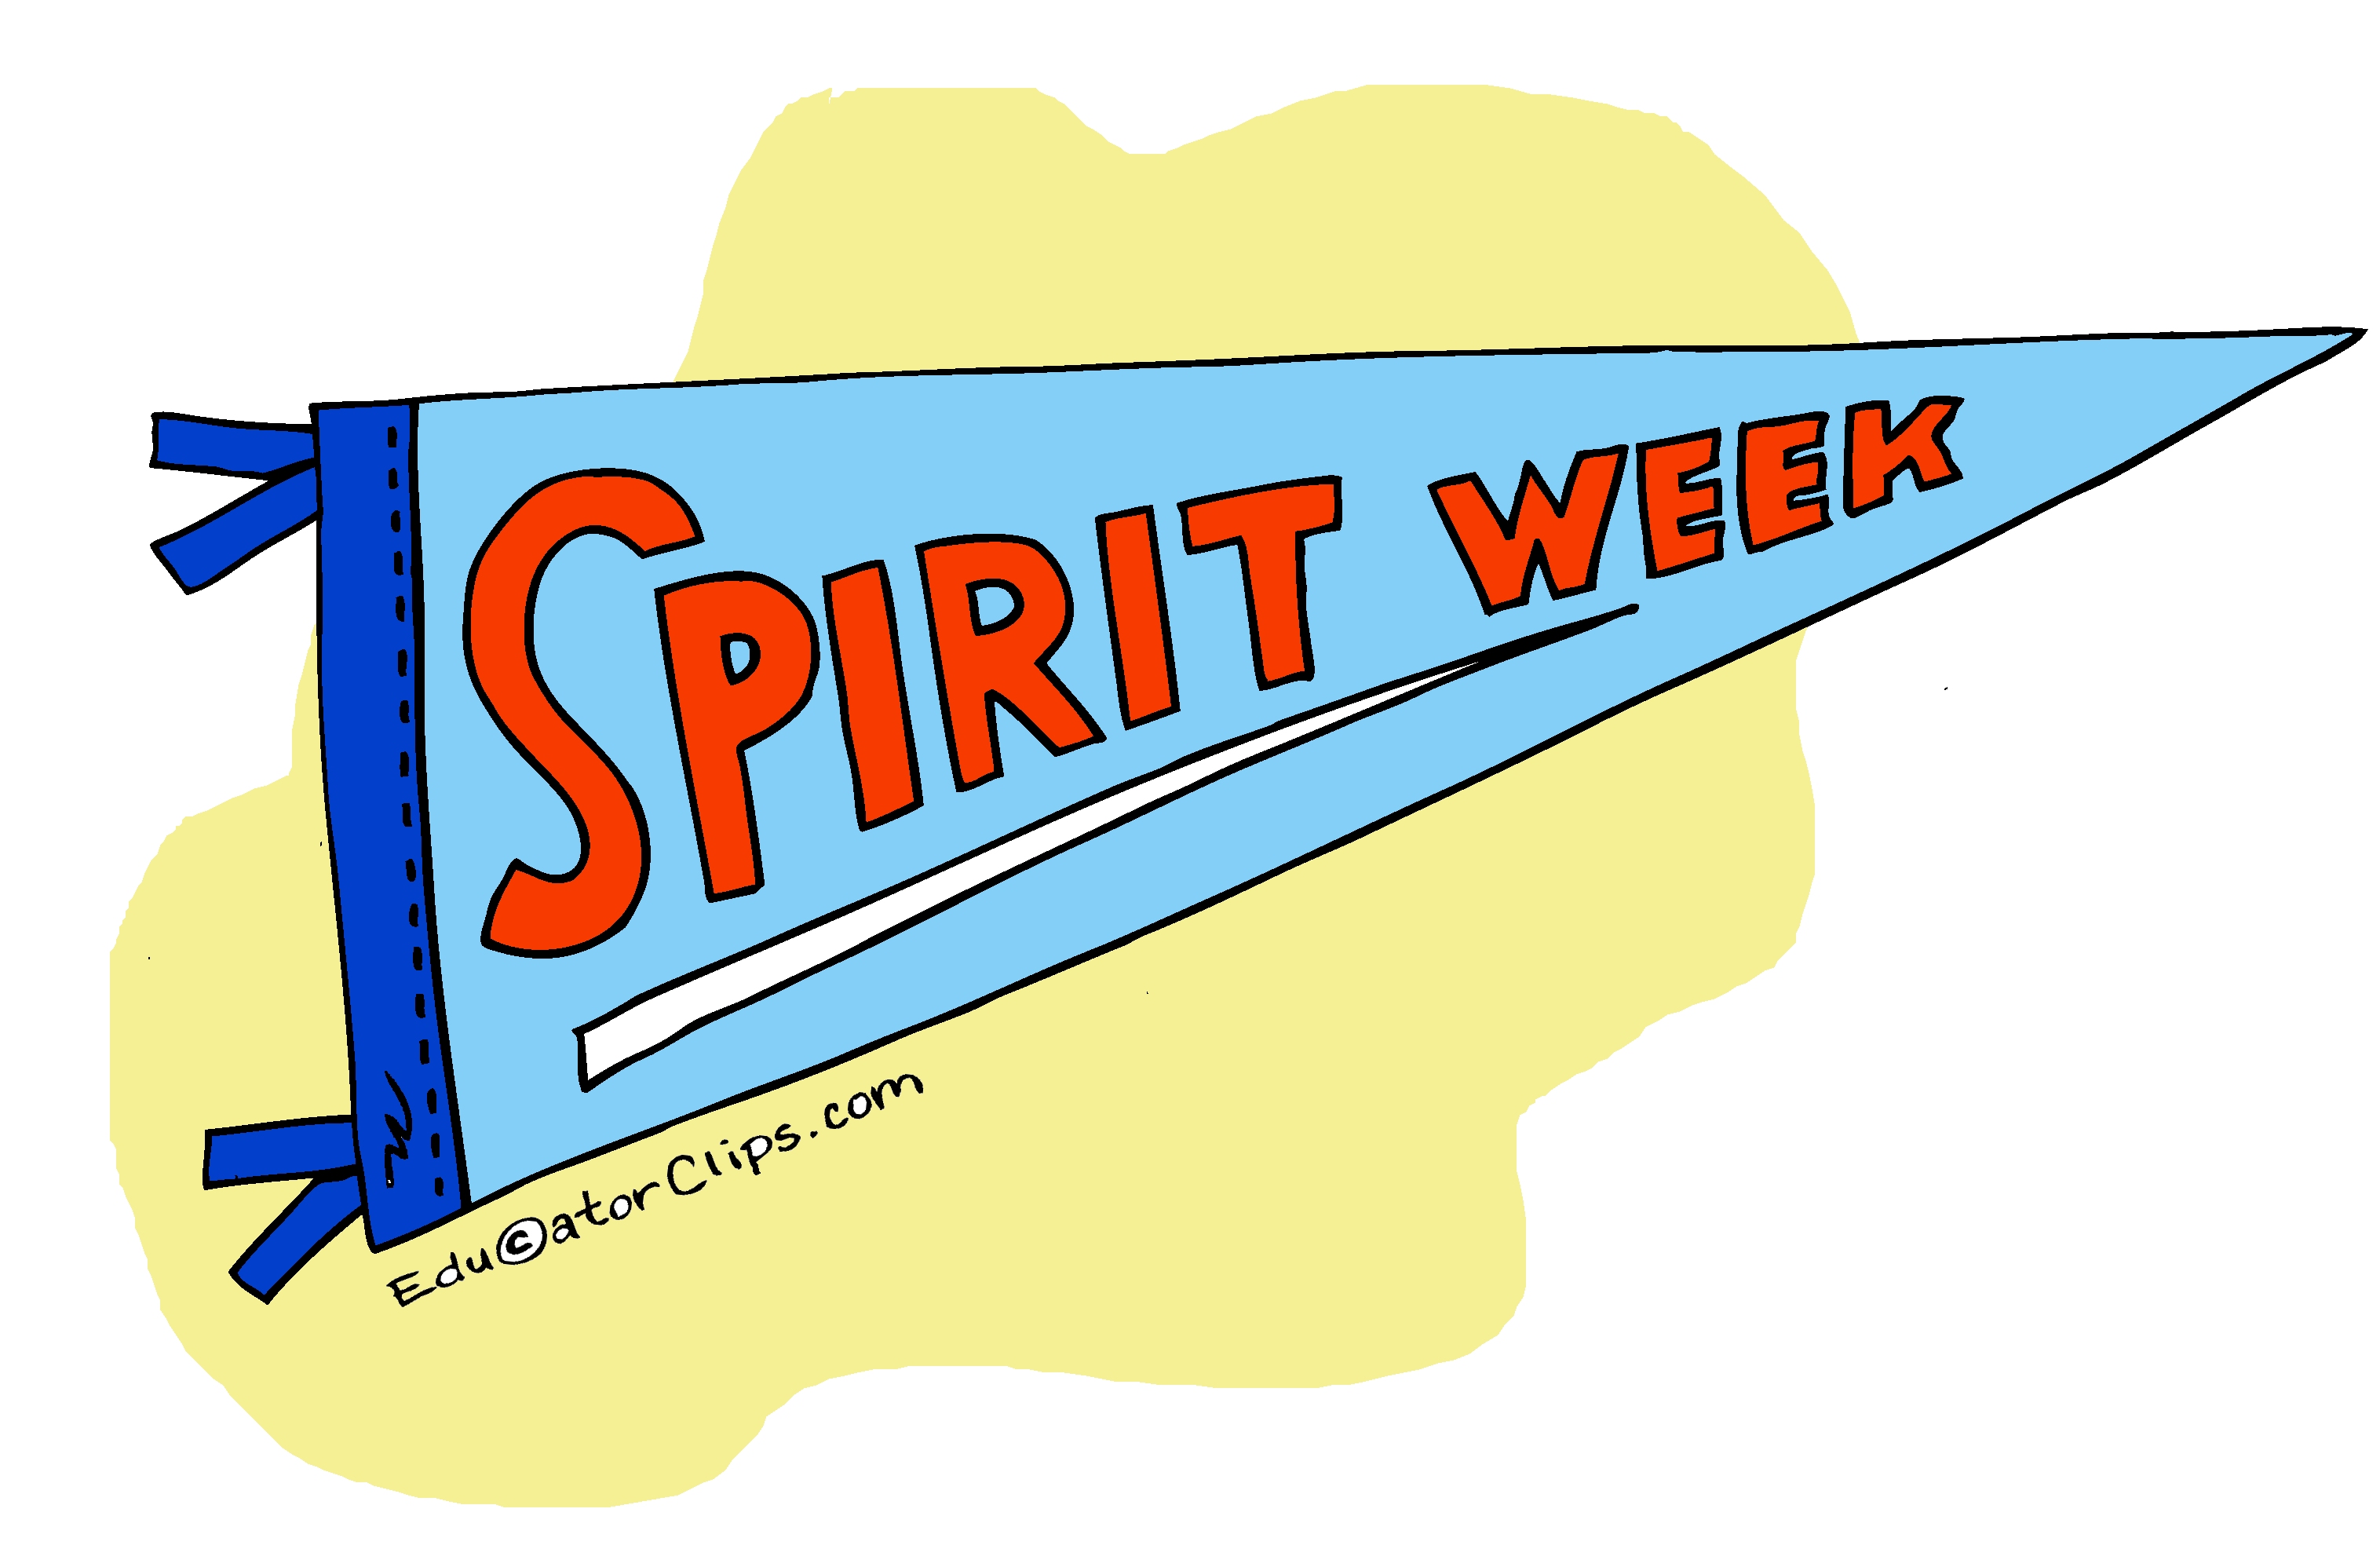 spirit week clipart